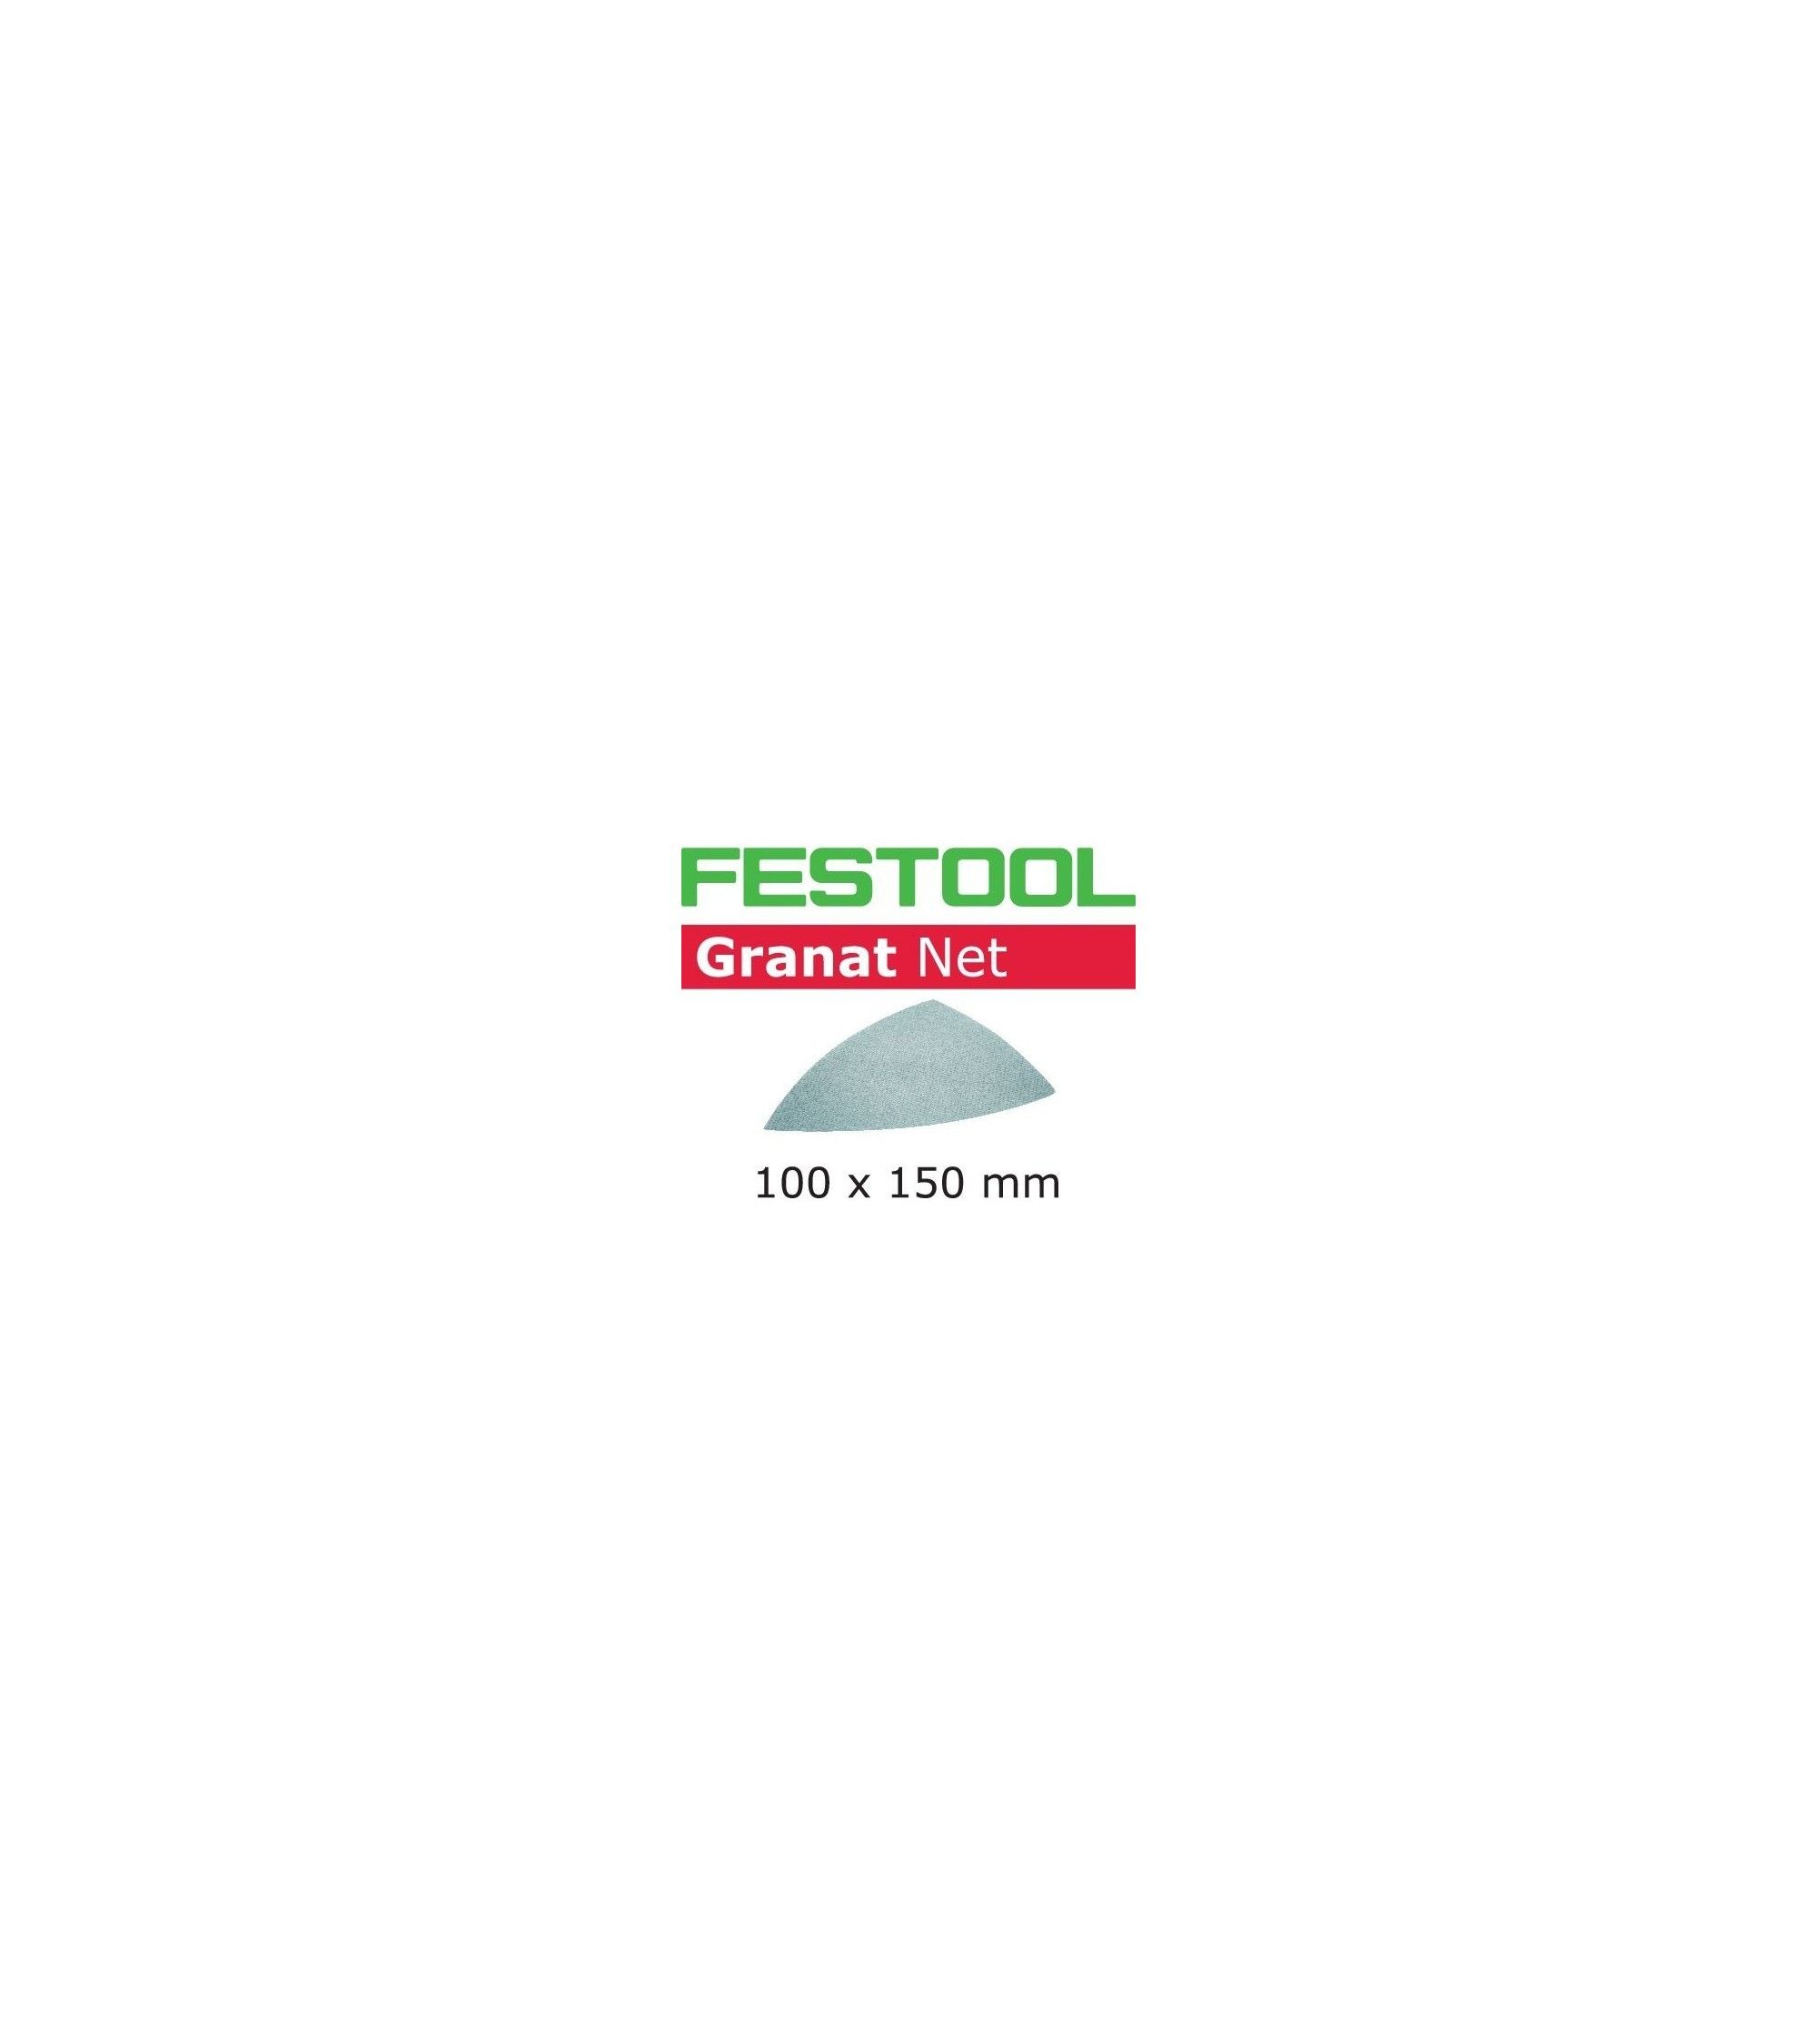 Festool Abrasive net STF DELTA P240 GR NET/50 Granat Net, KAINA BE PVM: 49.77, KODAS: 203326 | 001